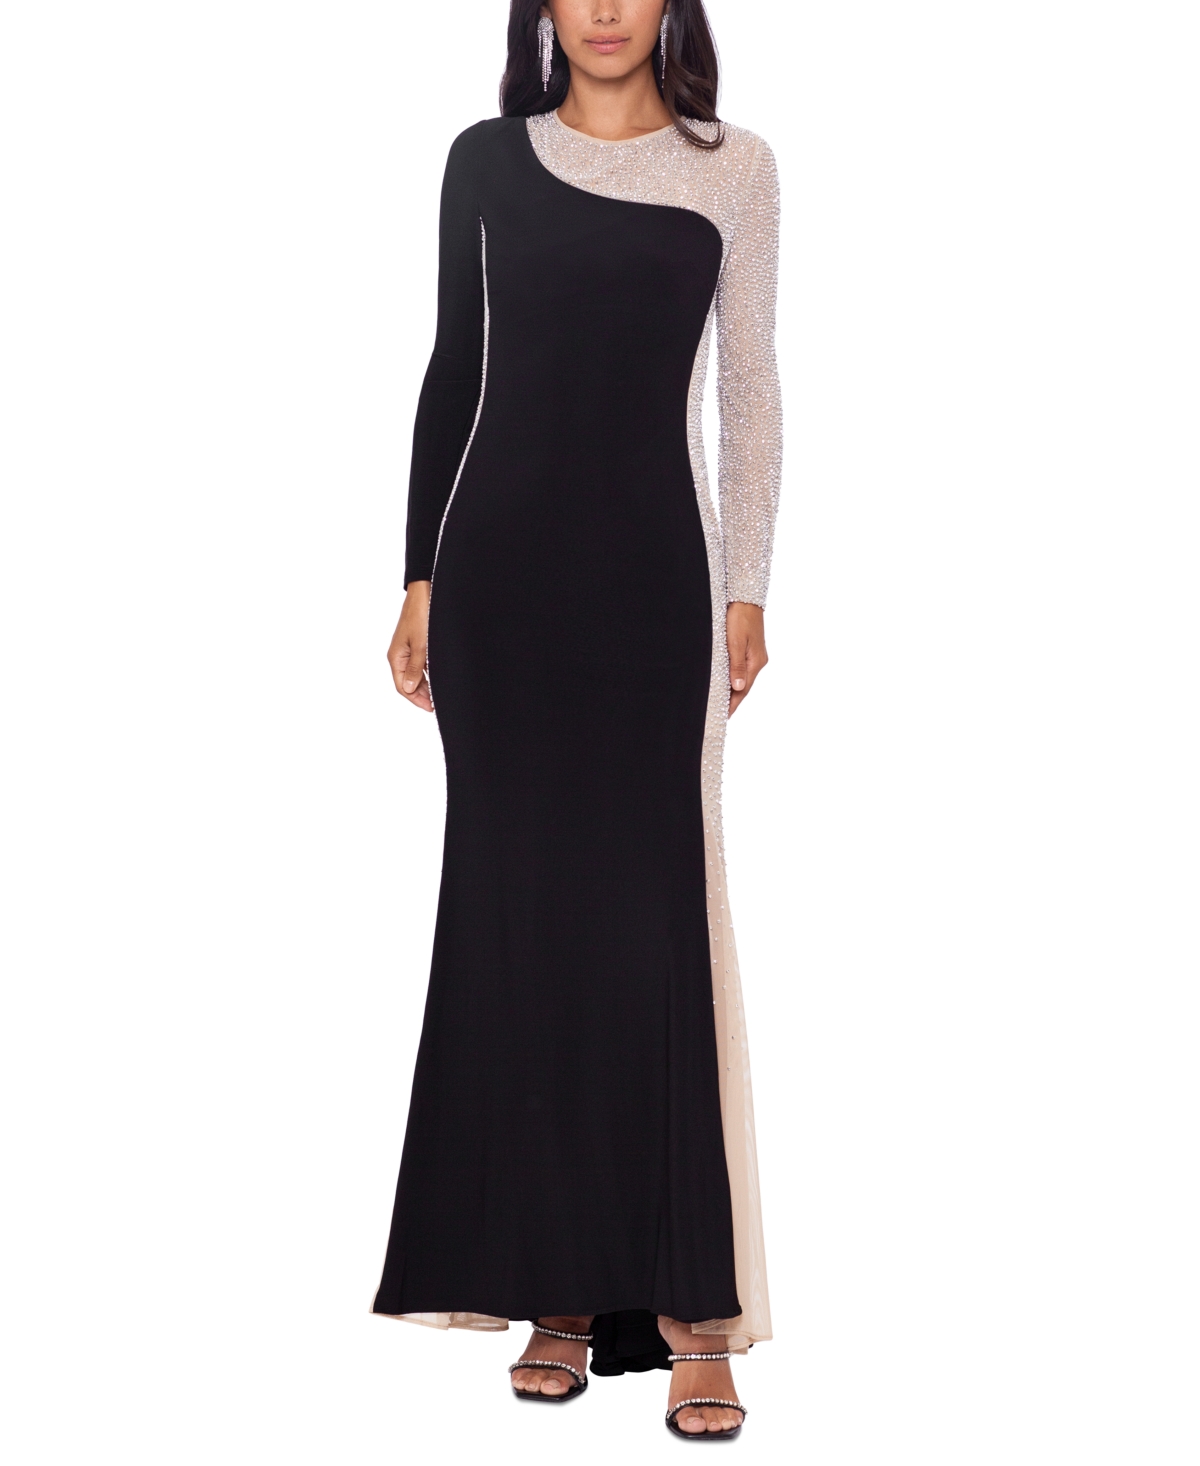 Women's Two-Tone Long-Sleeve Jersey-Knit Gown - Black Nude Silver